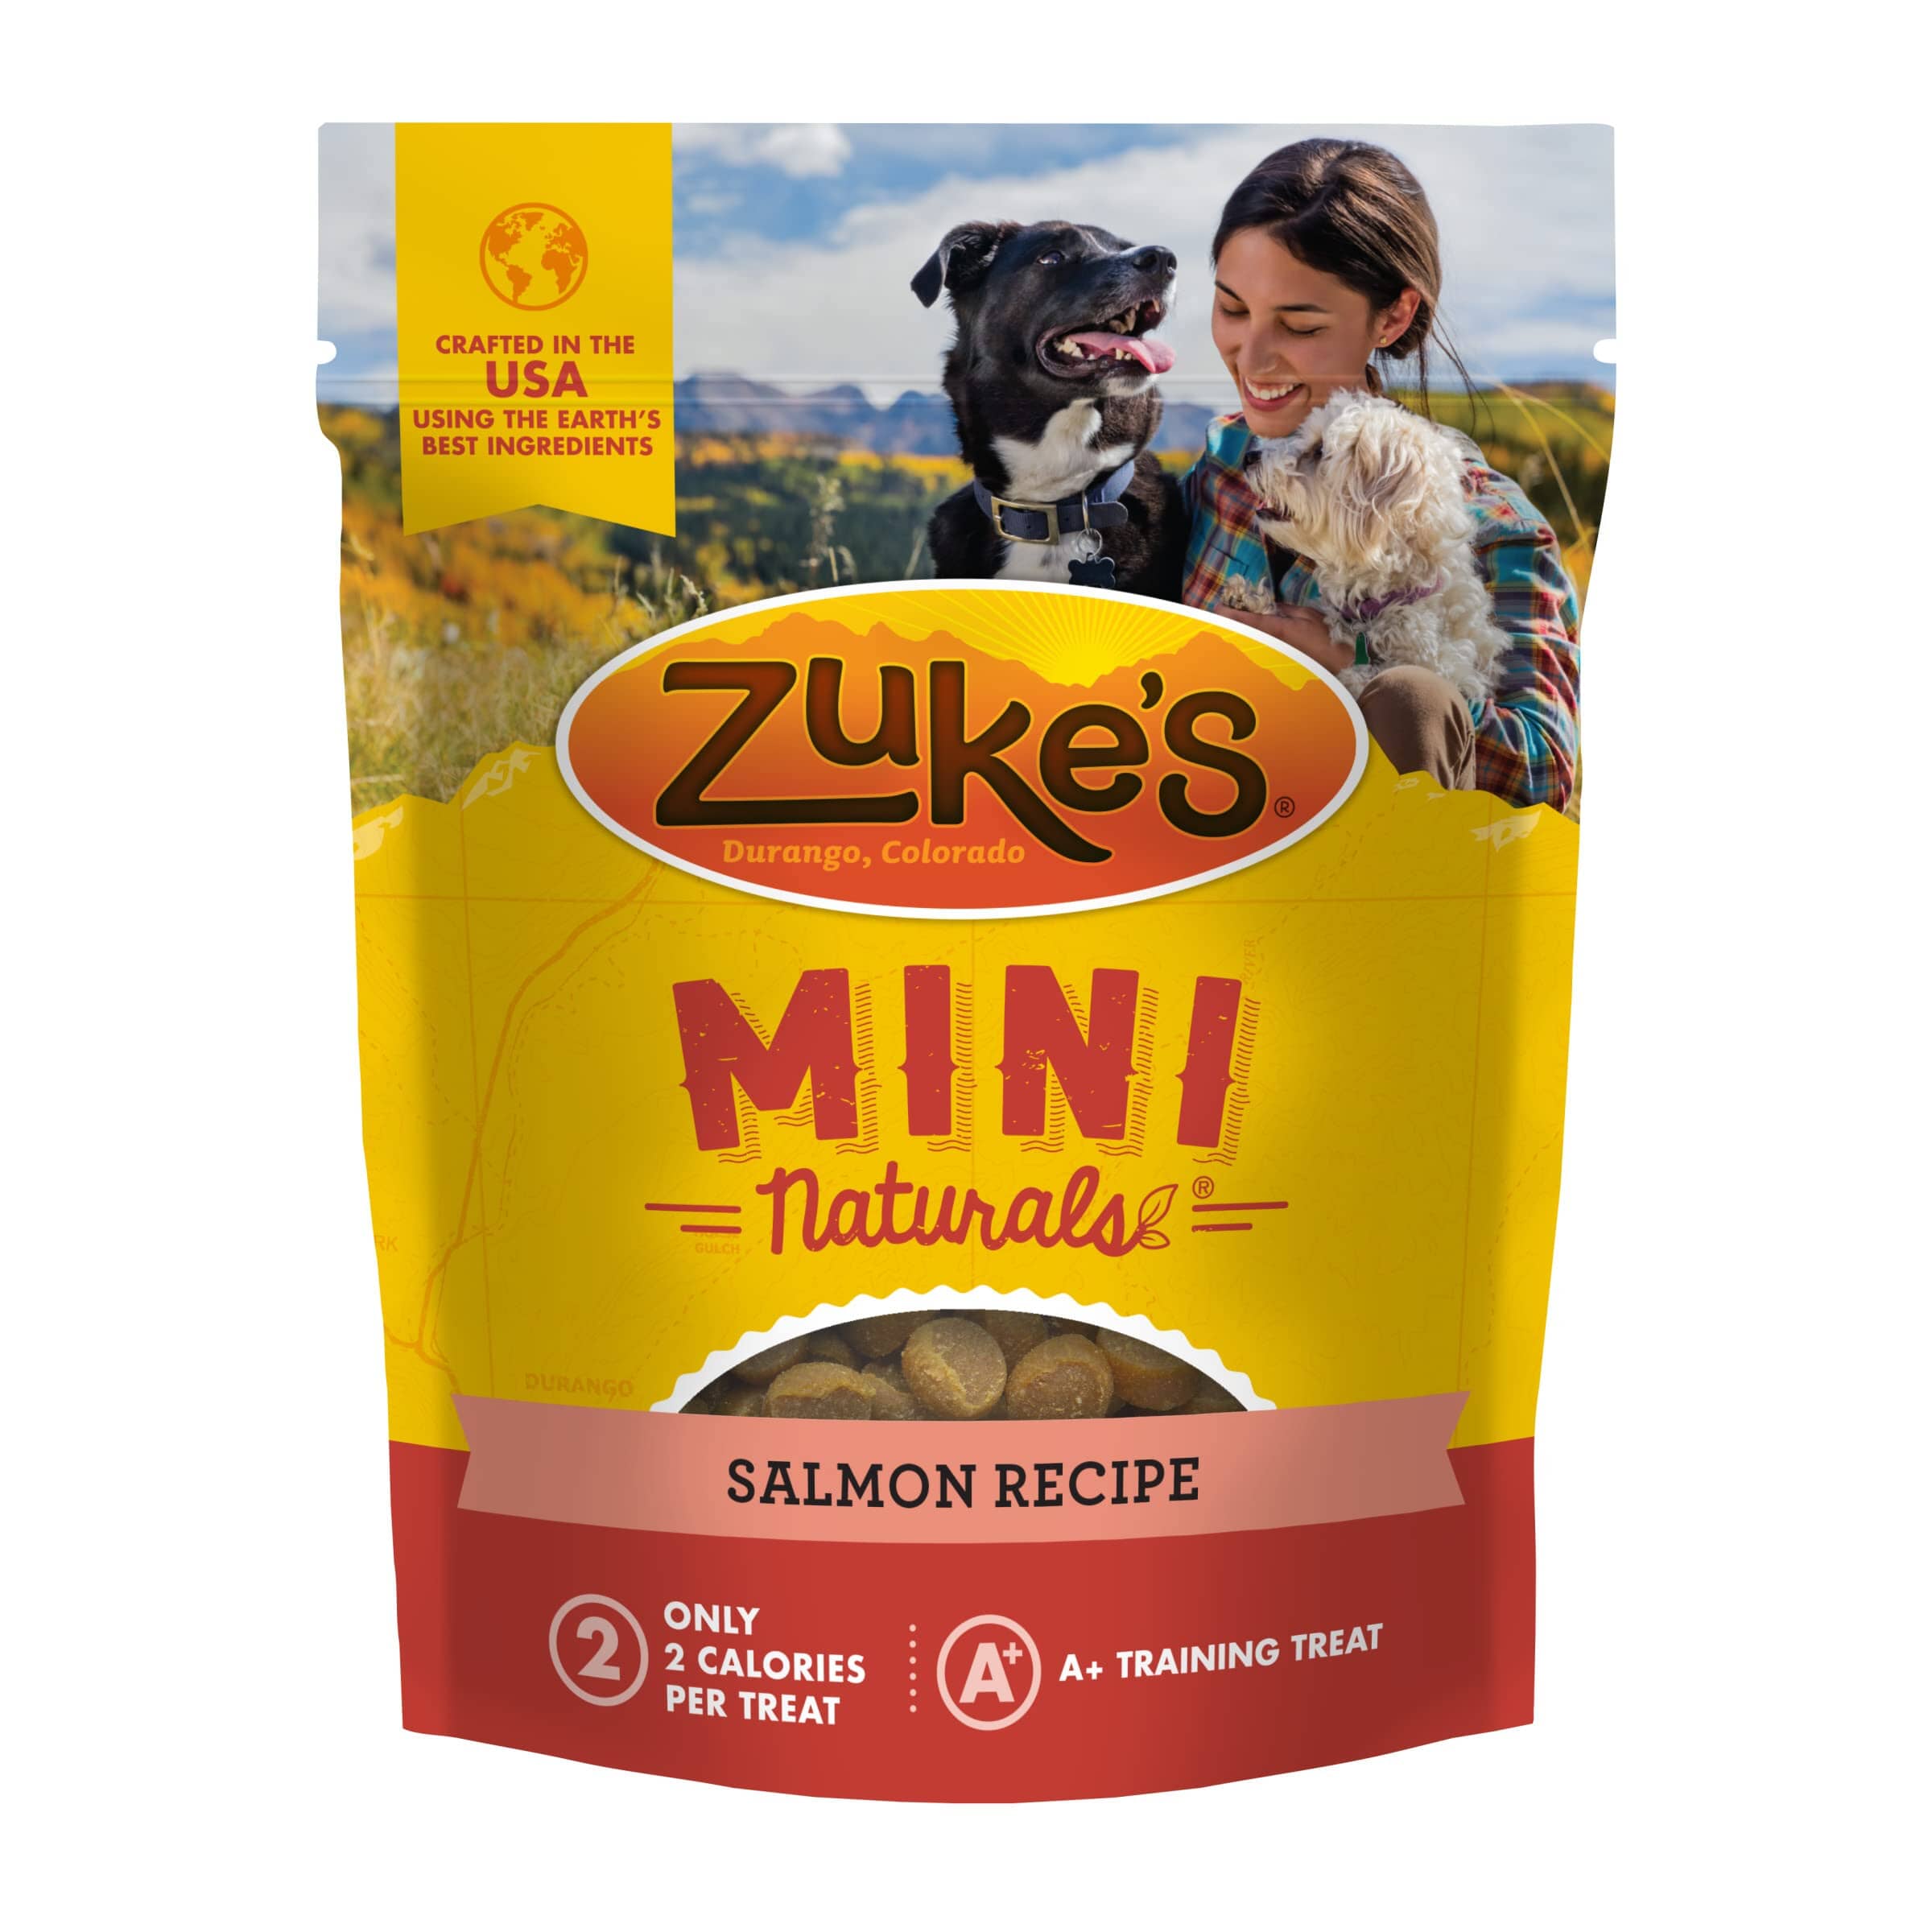 Zukes Mini Naturals Salmon Recipe Training Soft and Chewy Dog Treats 16 Oz 